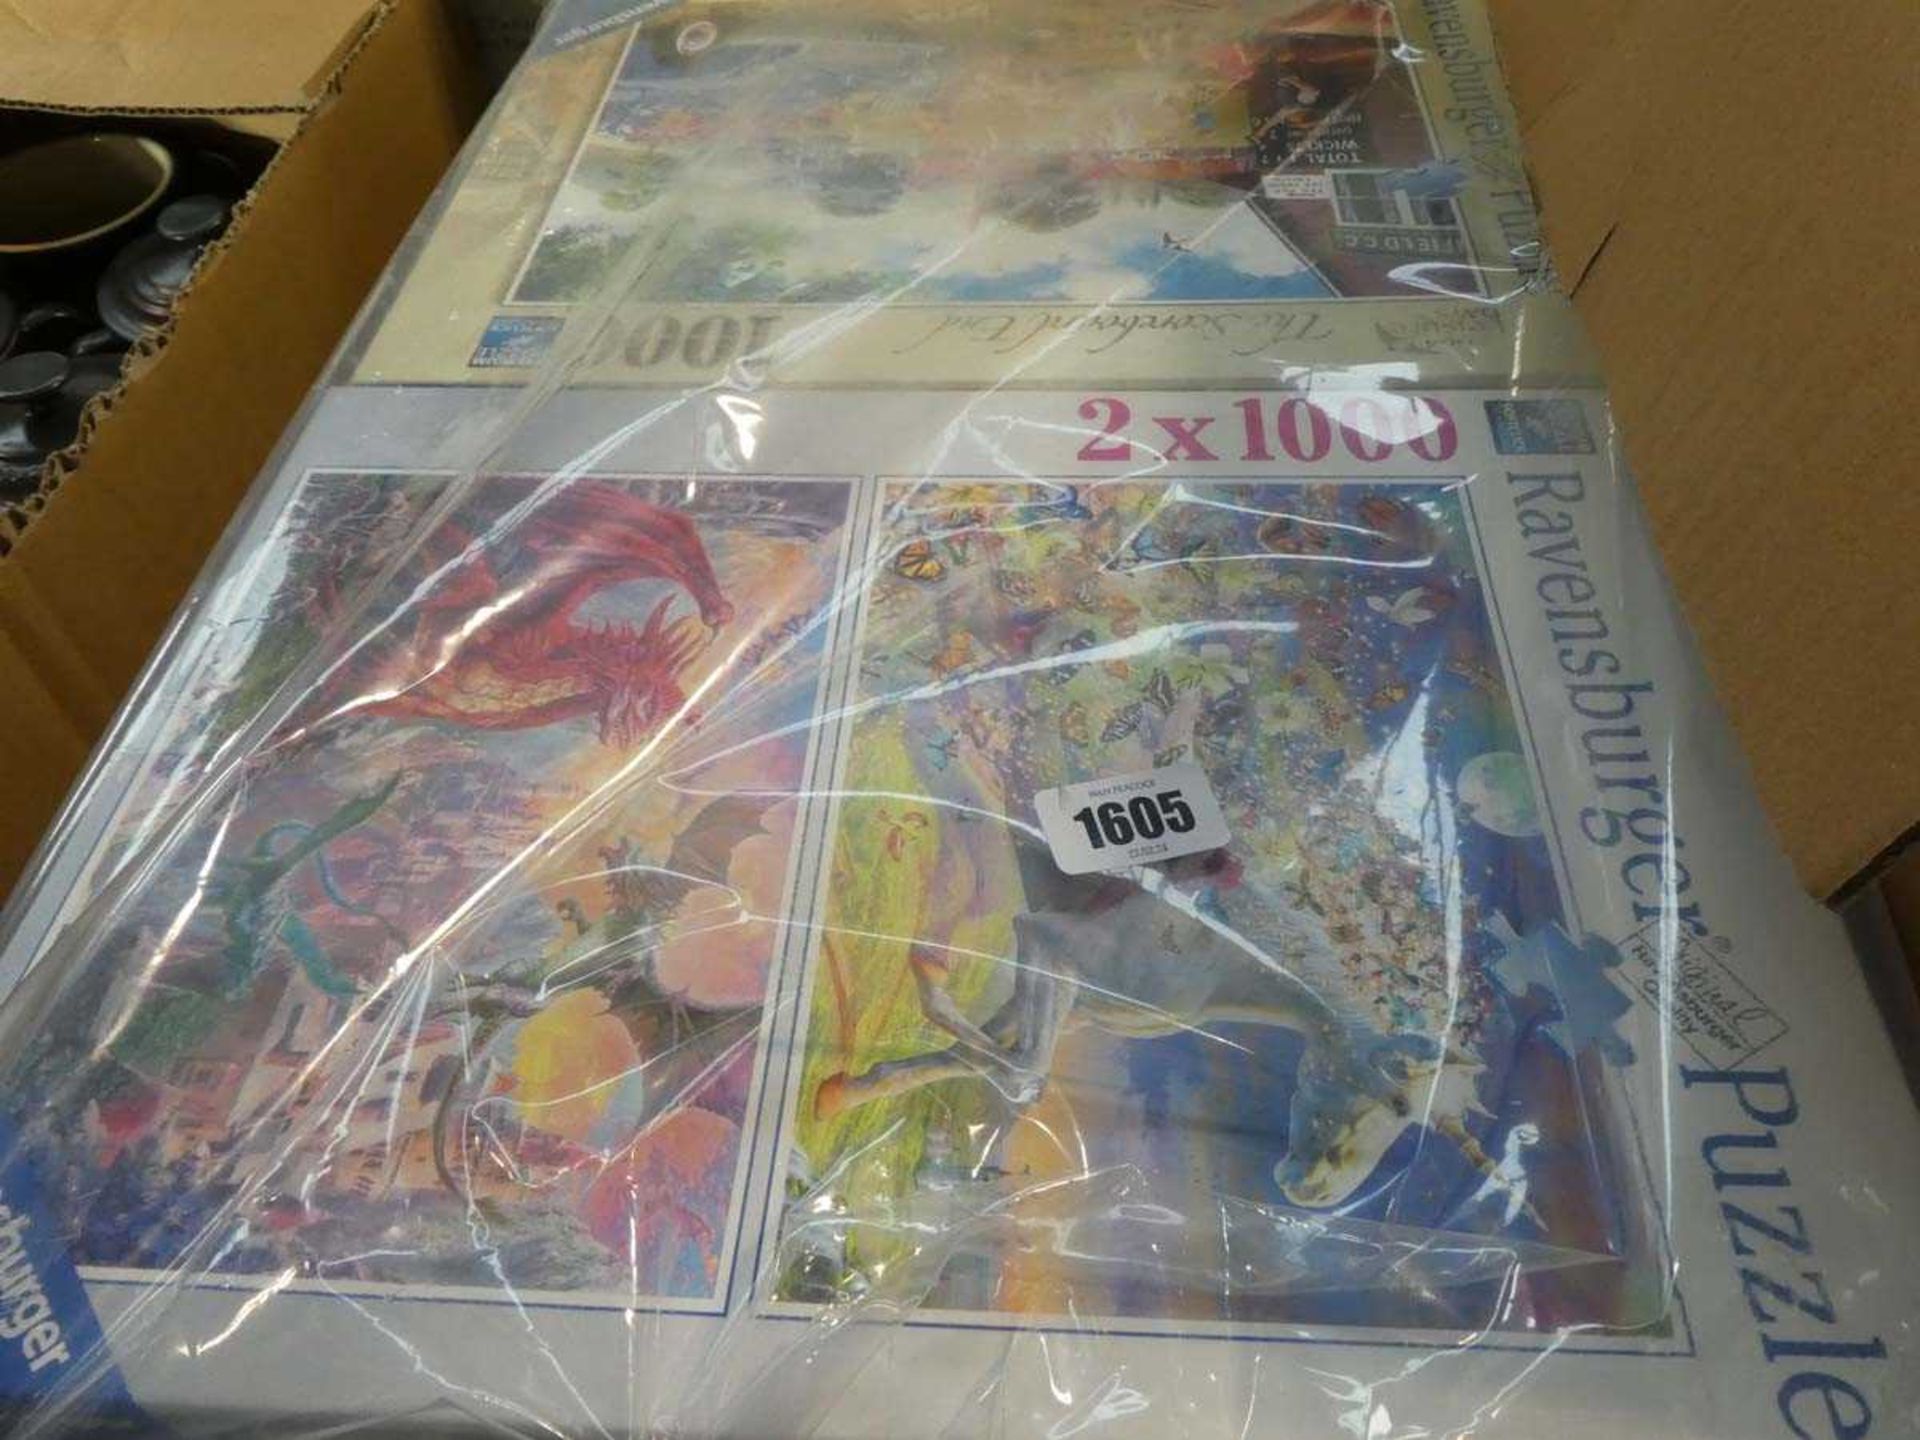 Bag containing 6x 1000 piece jigsaws